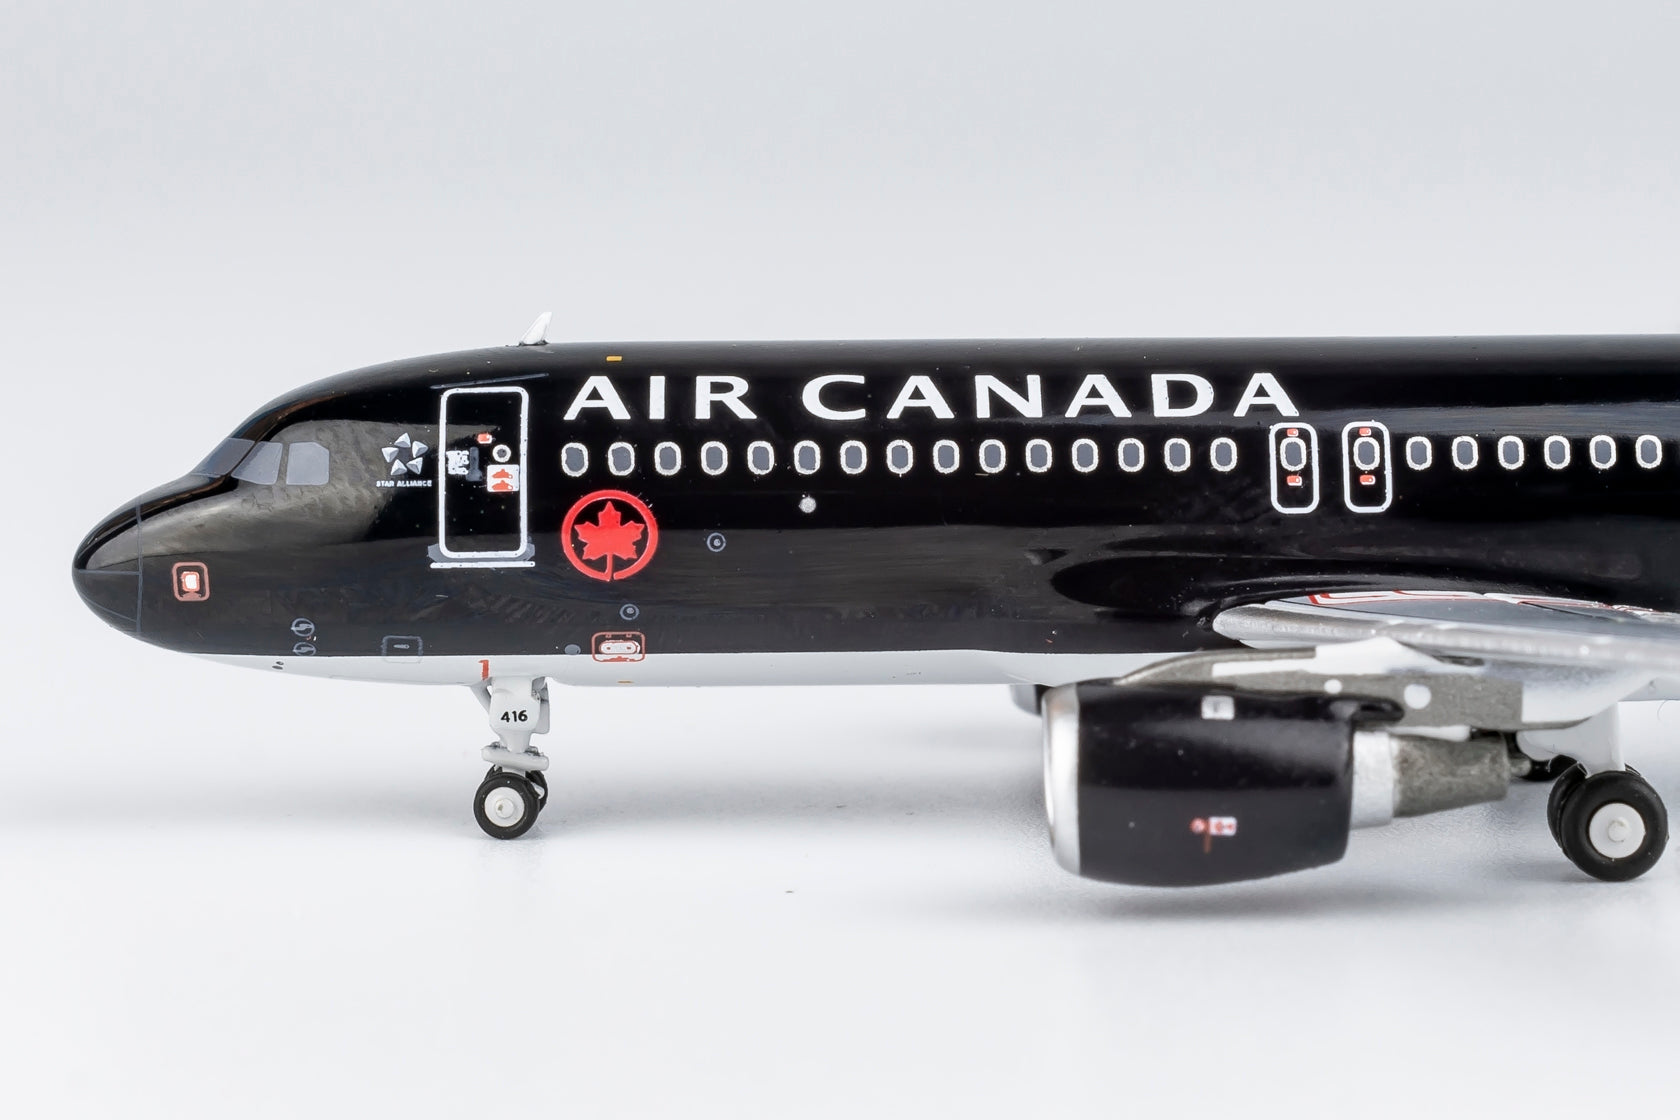 One left RESTOCK** 1:400 Air Canada Jetz A320-200 New livery NG Models –  mv400models